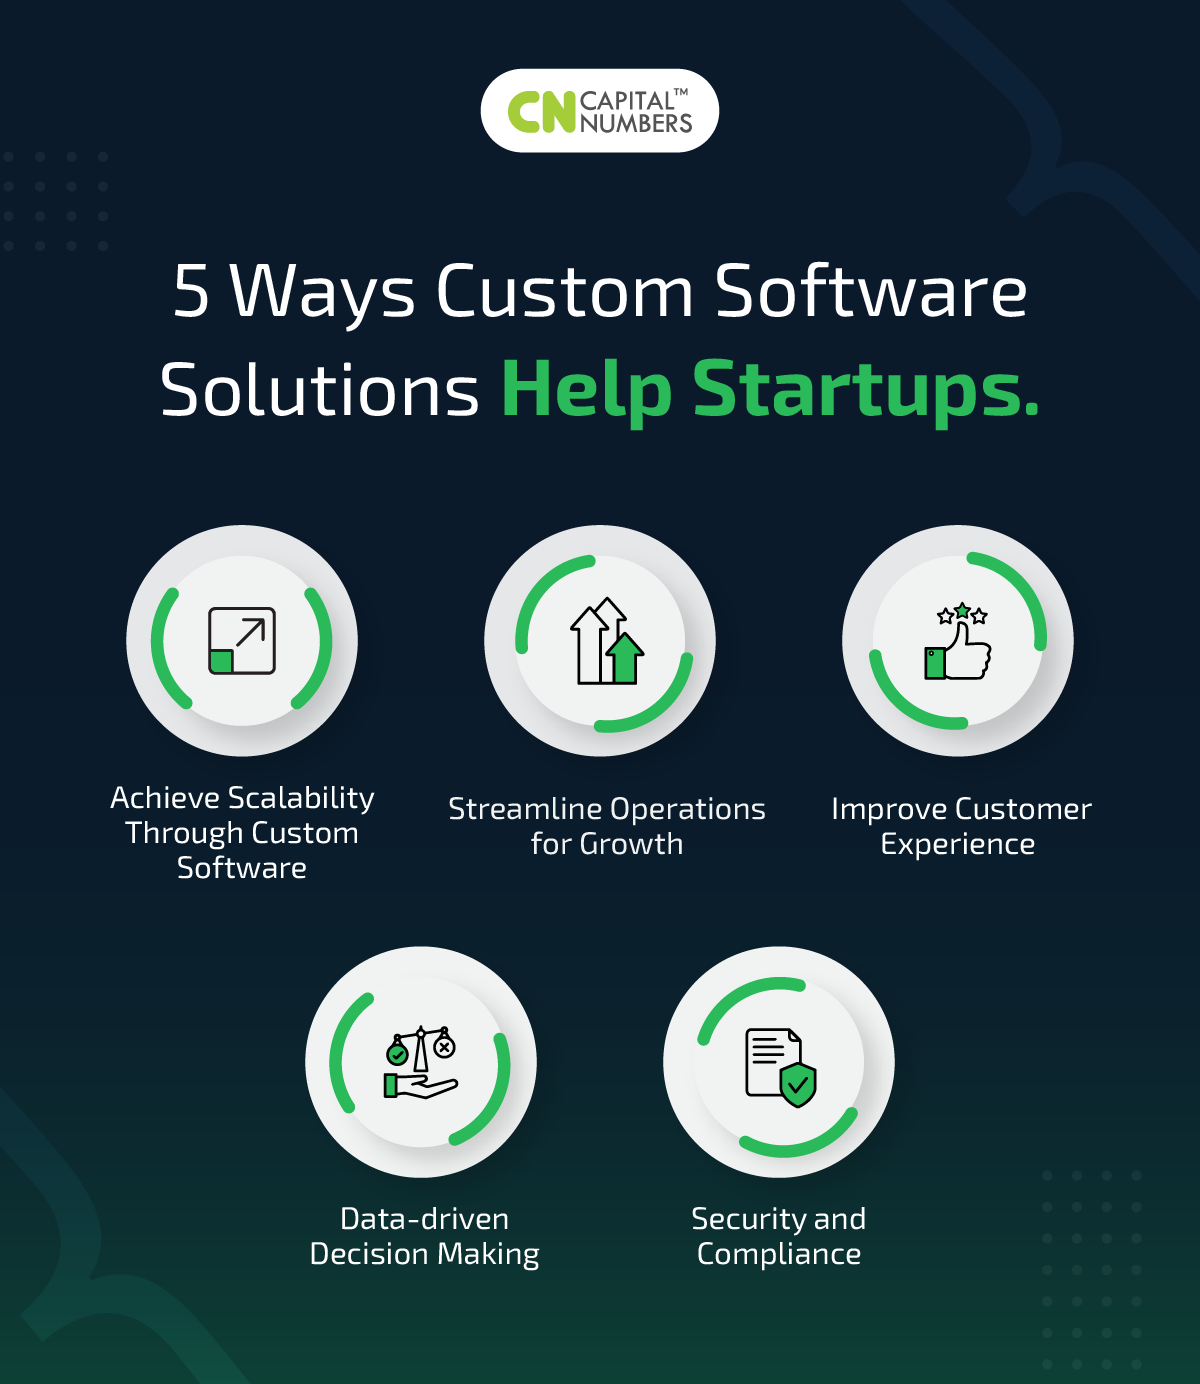 5 Ways Custom Software Solutions Help Startups